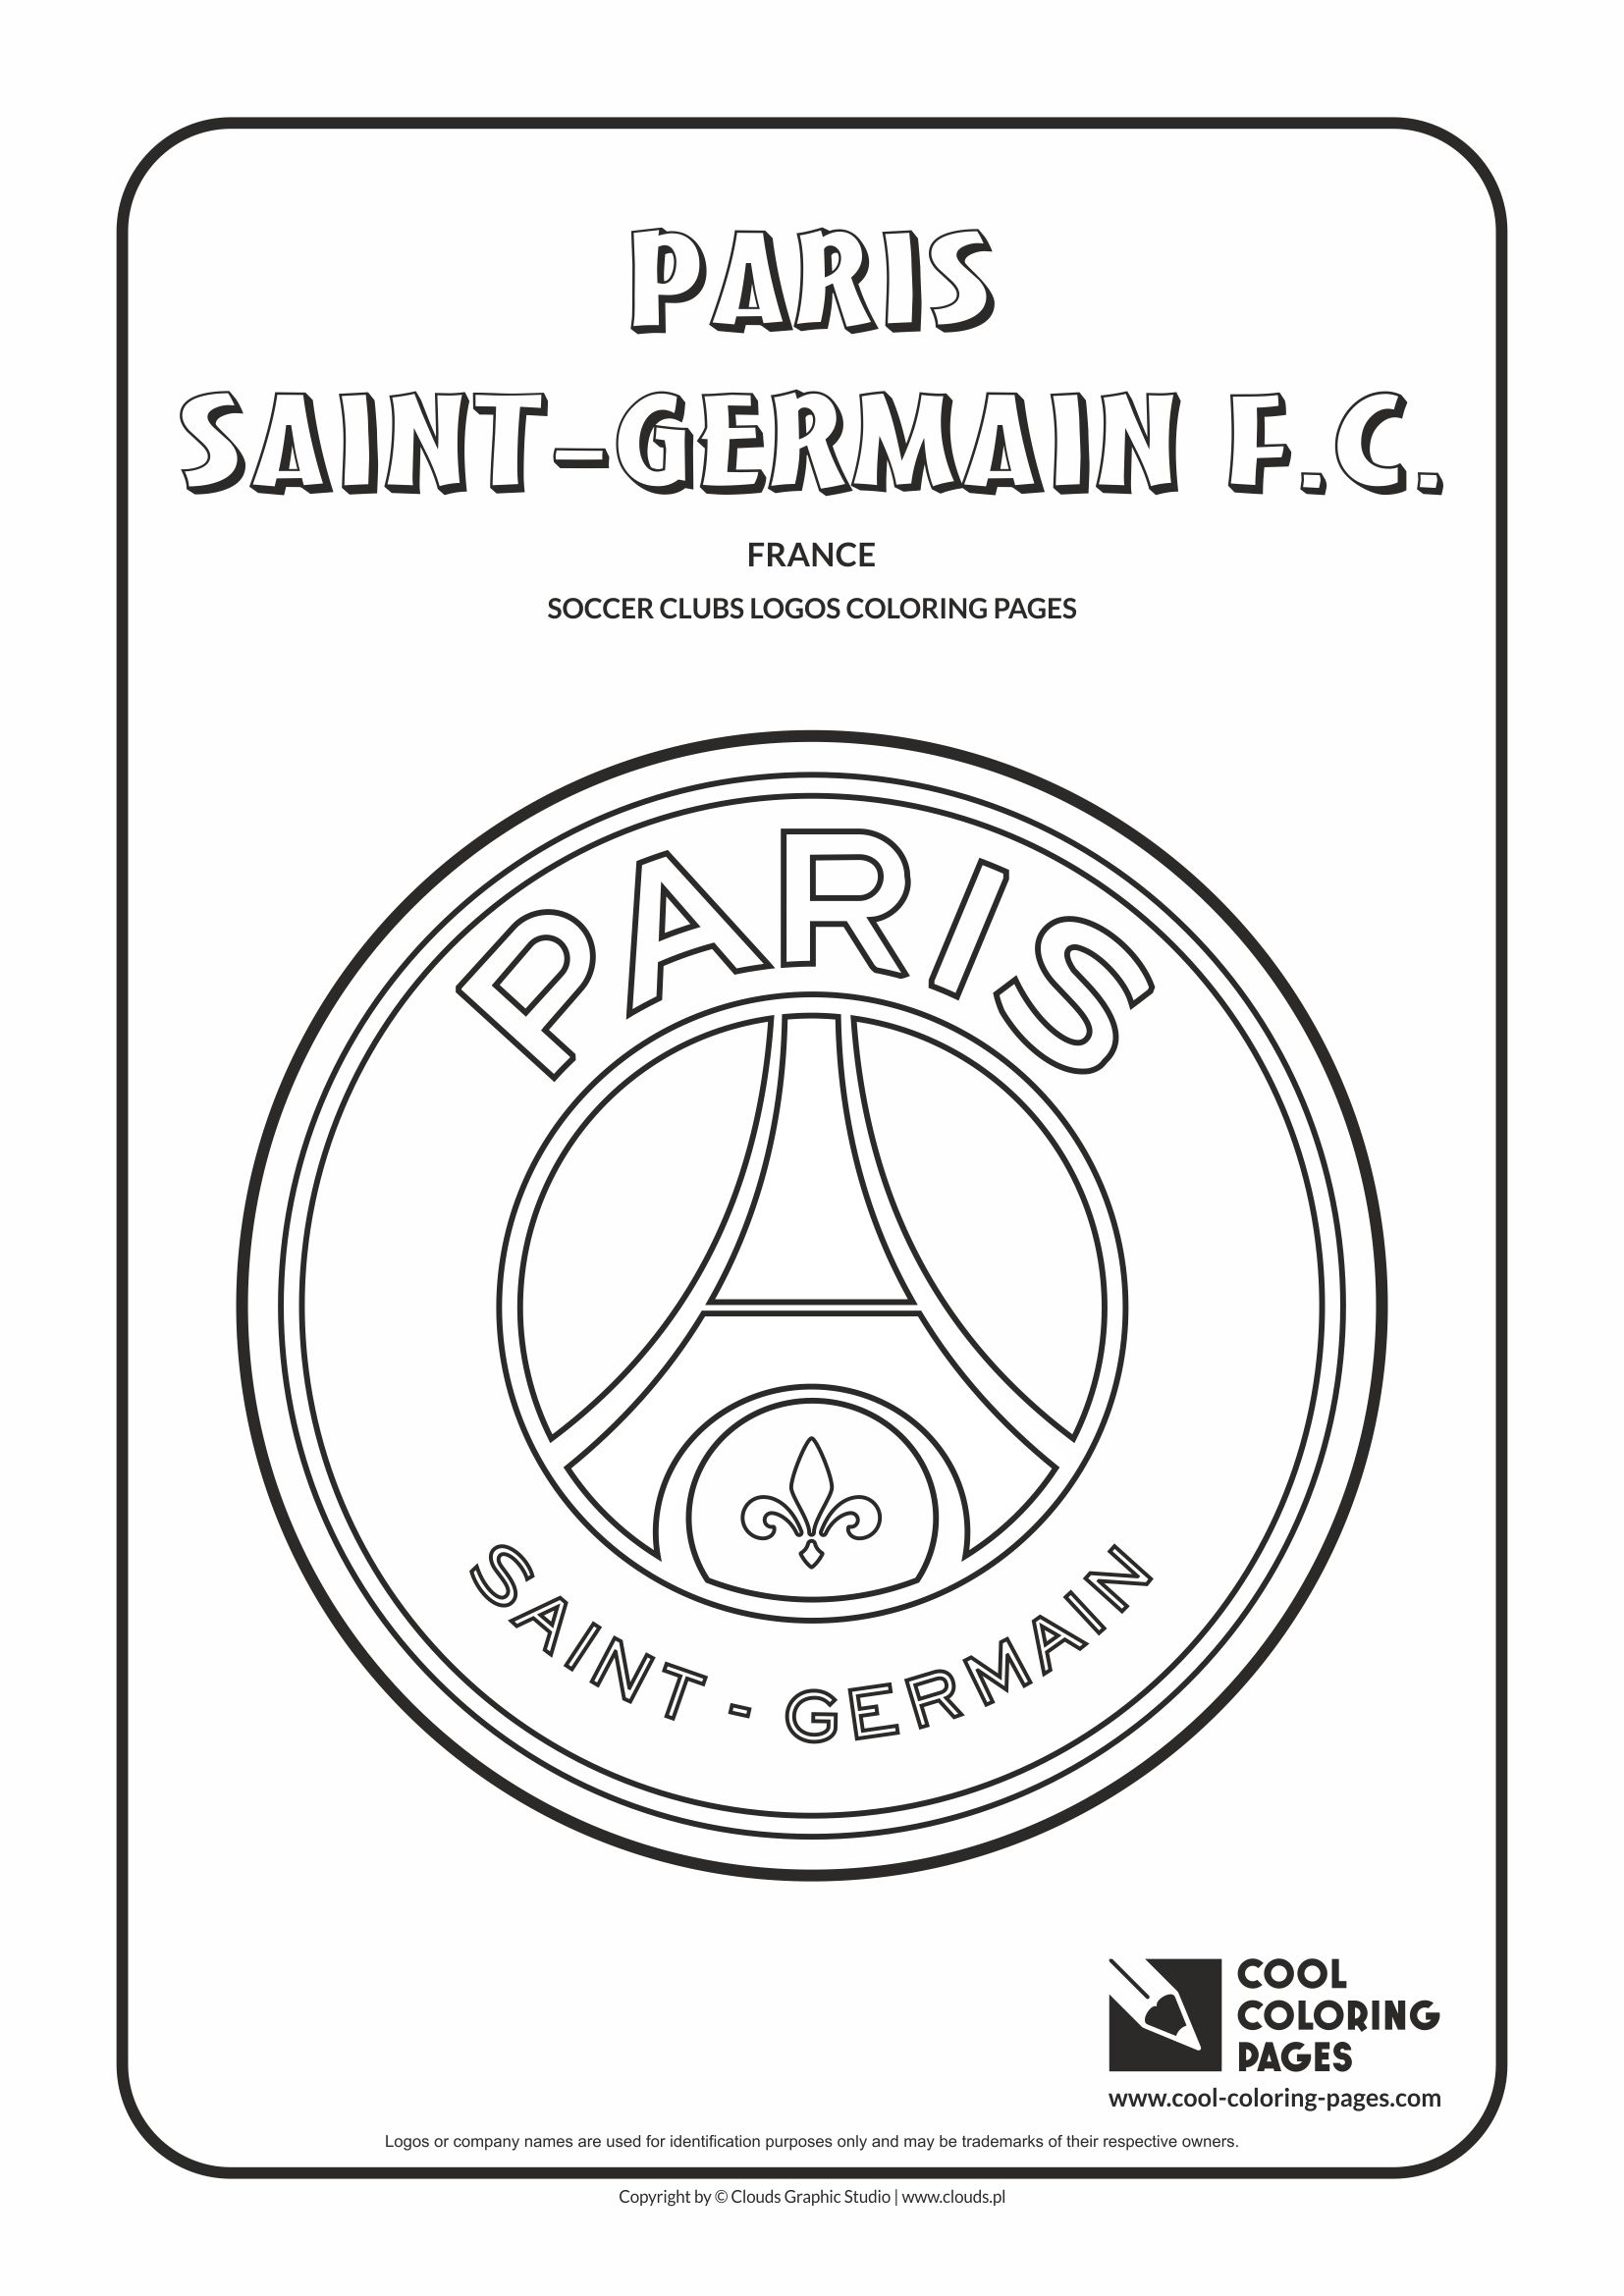 Cool Coloring Pages Paris Saint-Germain F.C. logo coloring page - Cool